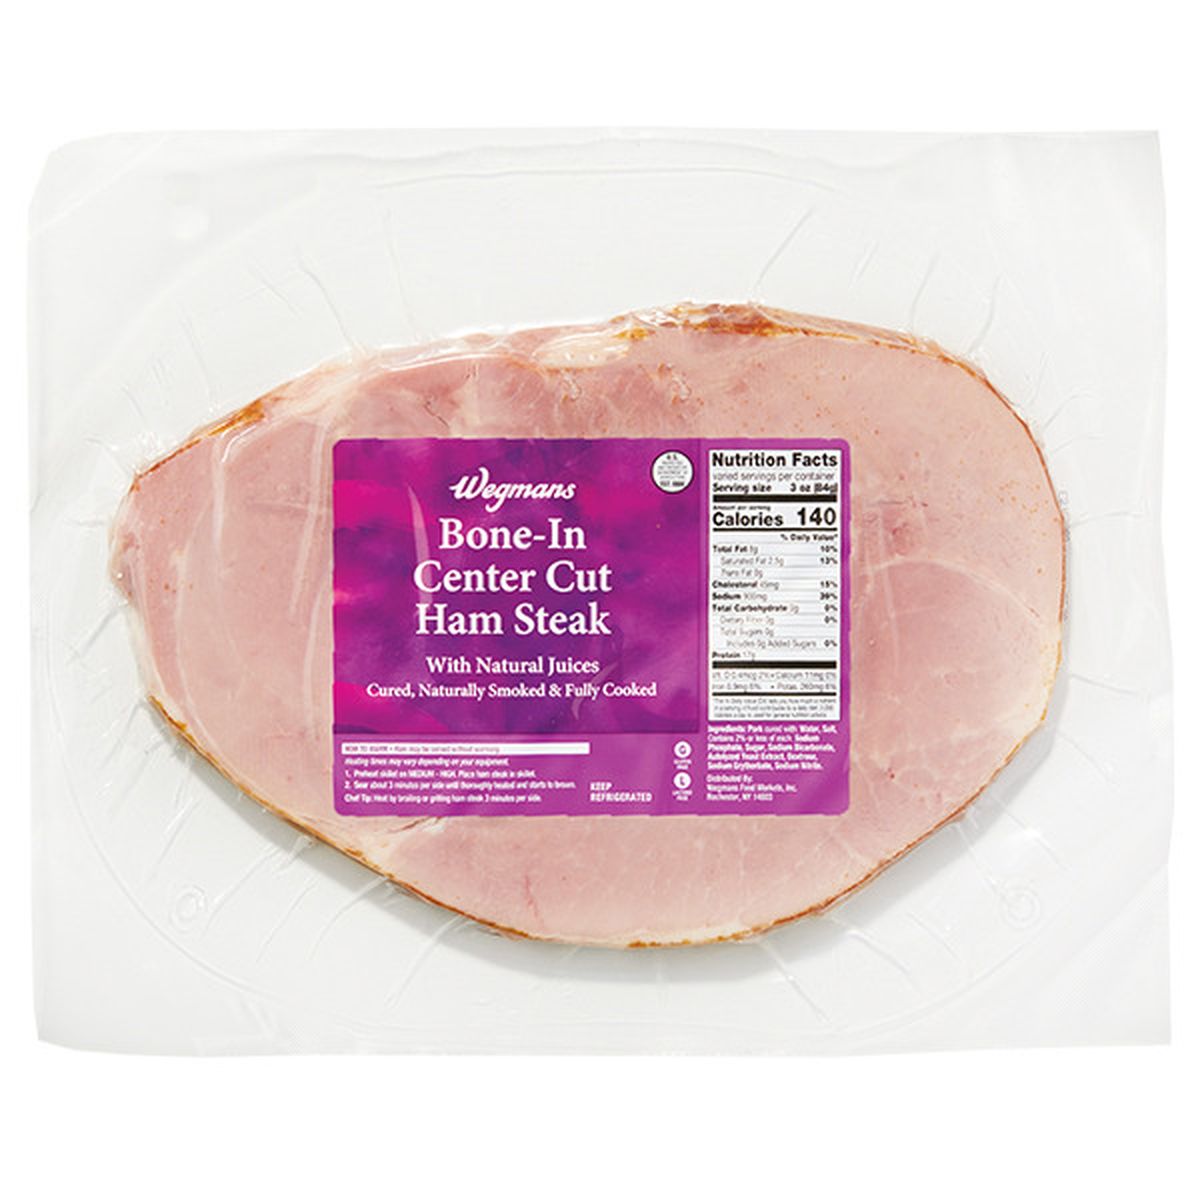 Calories in Wegmans Bone-In Center Cut Ham Steak